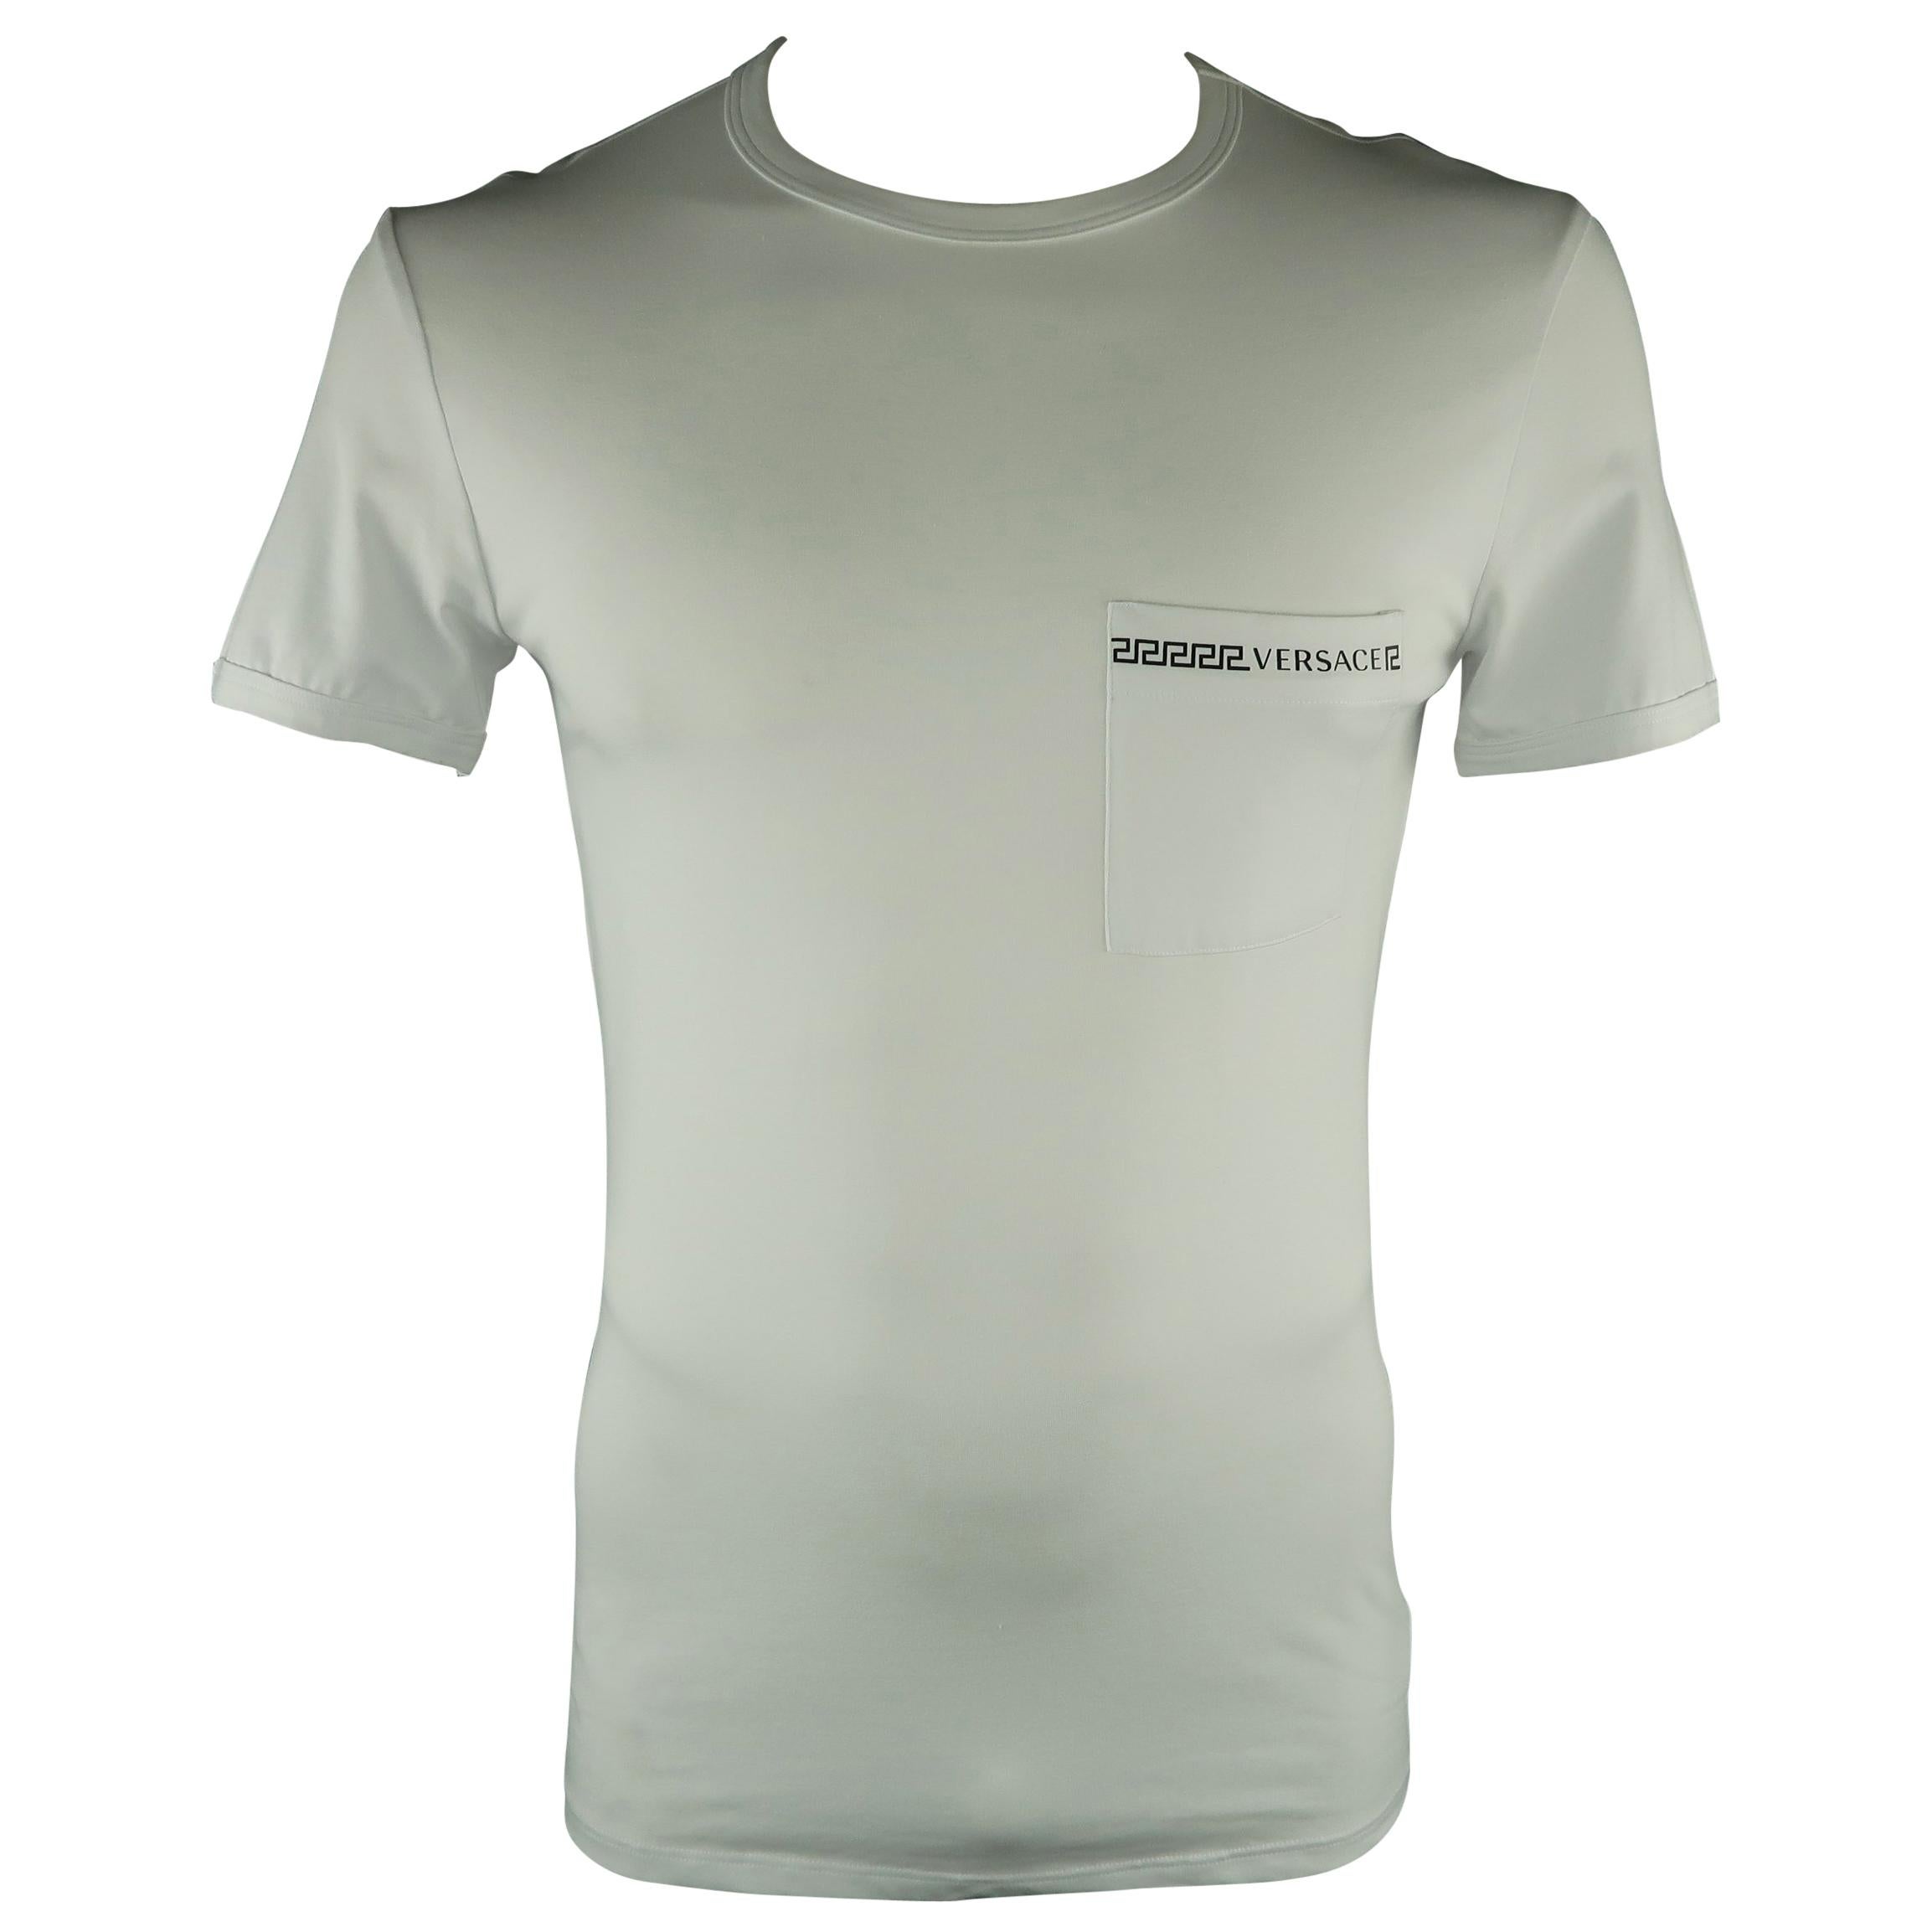 VERSACE Size M White Solid Cotton Blend T-shirt